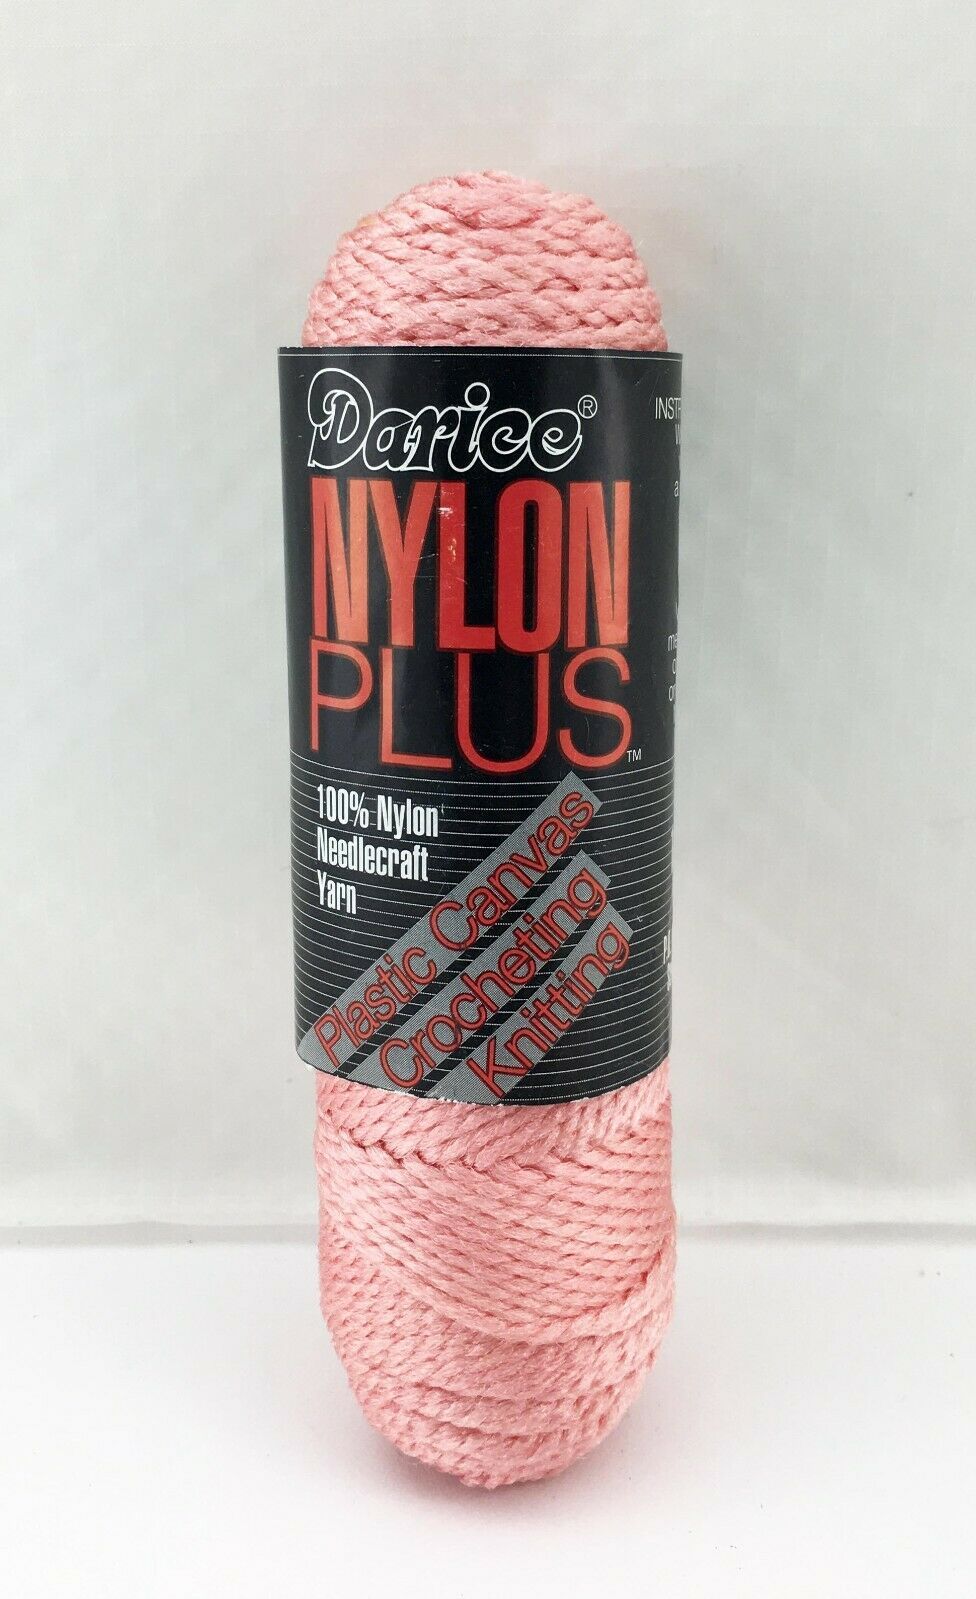 Darice Nylon Plus Nylon Plastic Canvas Needlecraft Yarn - 1 Skein Pink - $6.60